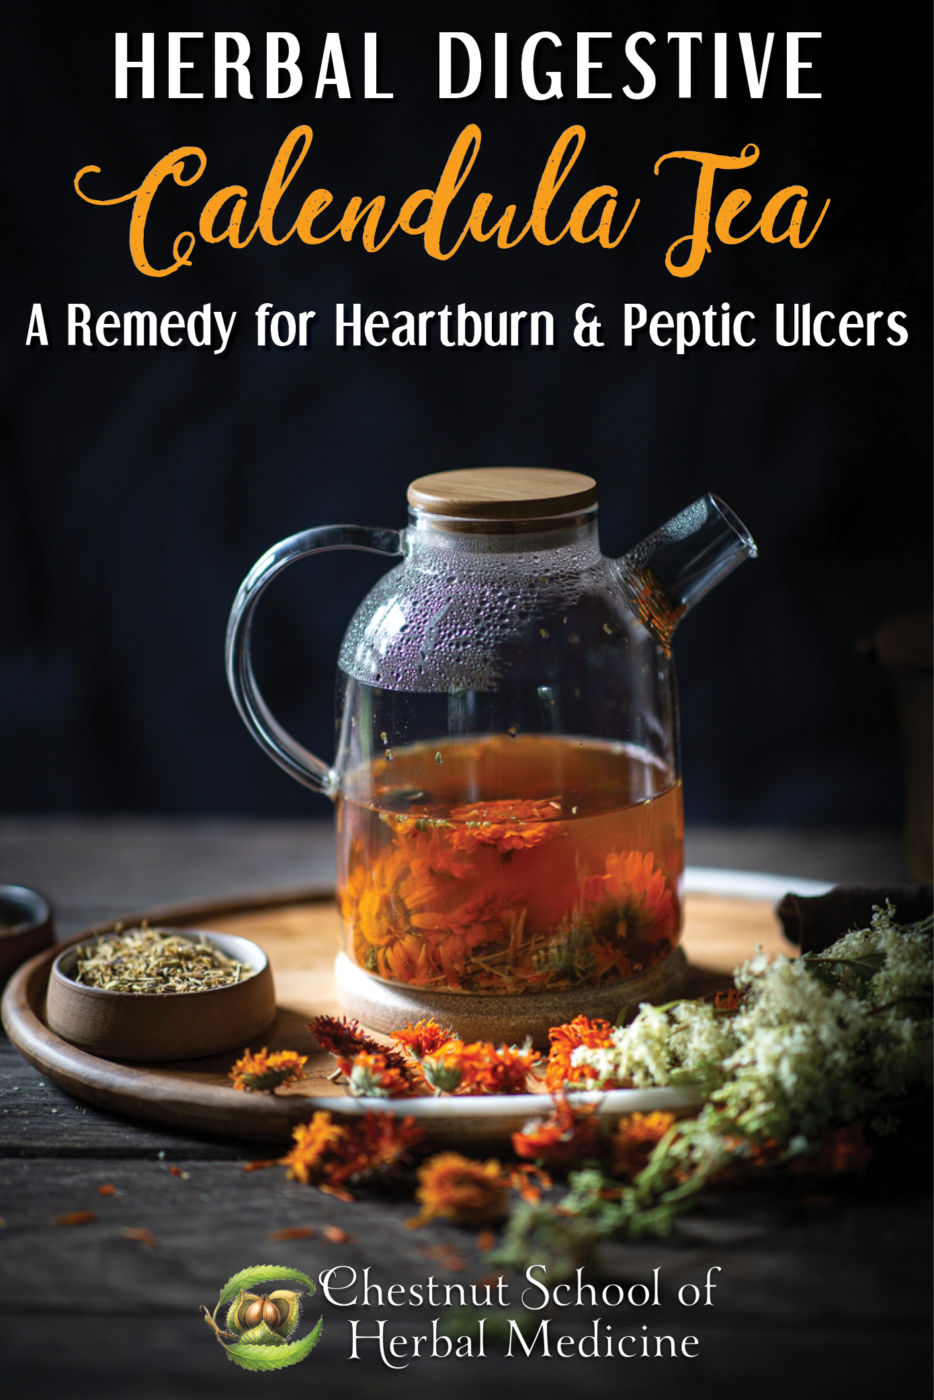 Calendula tea is a remedy for heartburn and peptic ulcers.